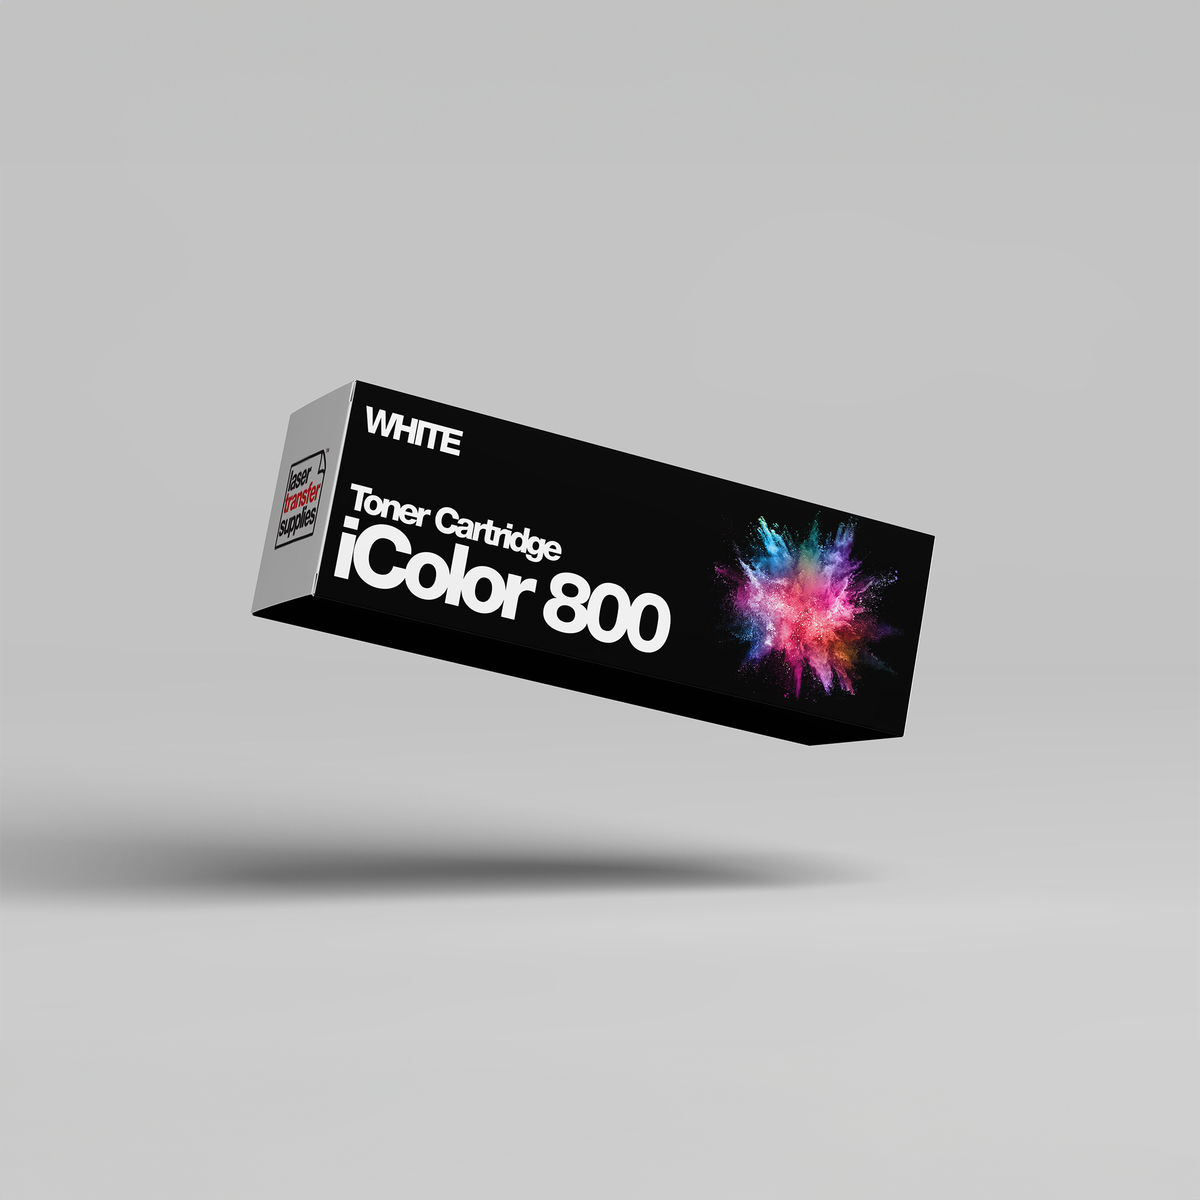 IColor 800 Toner